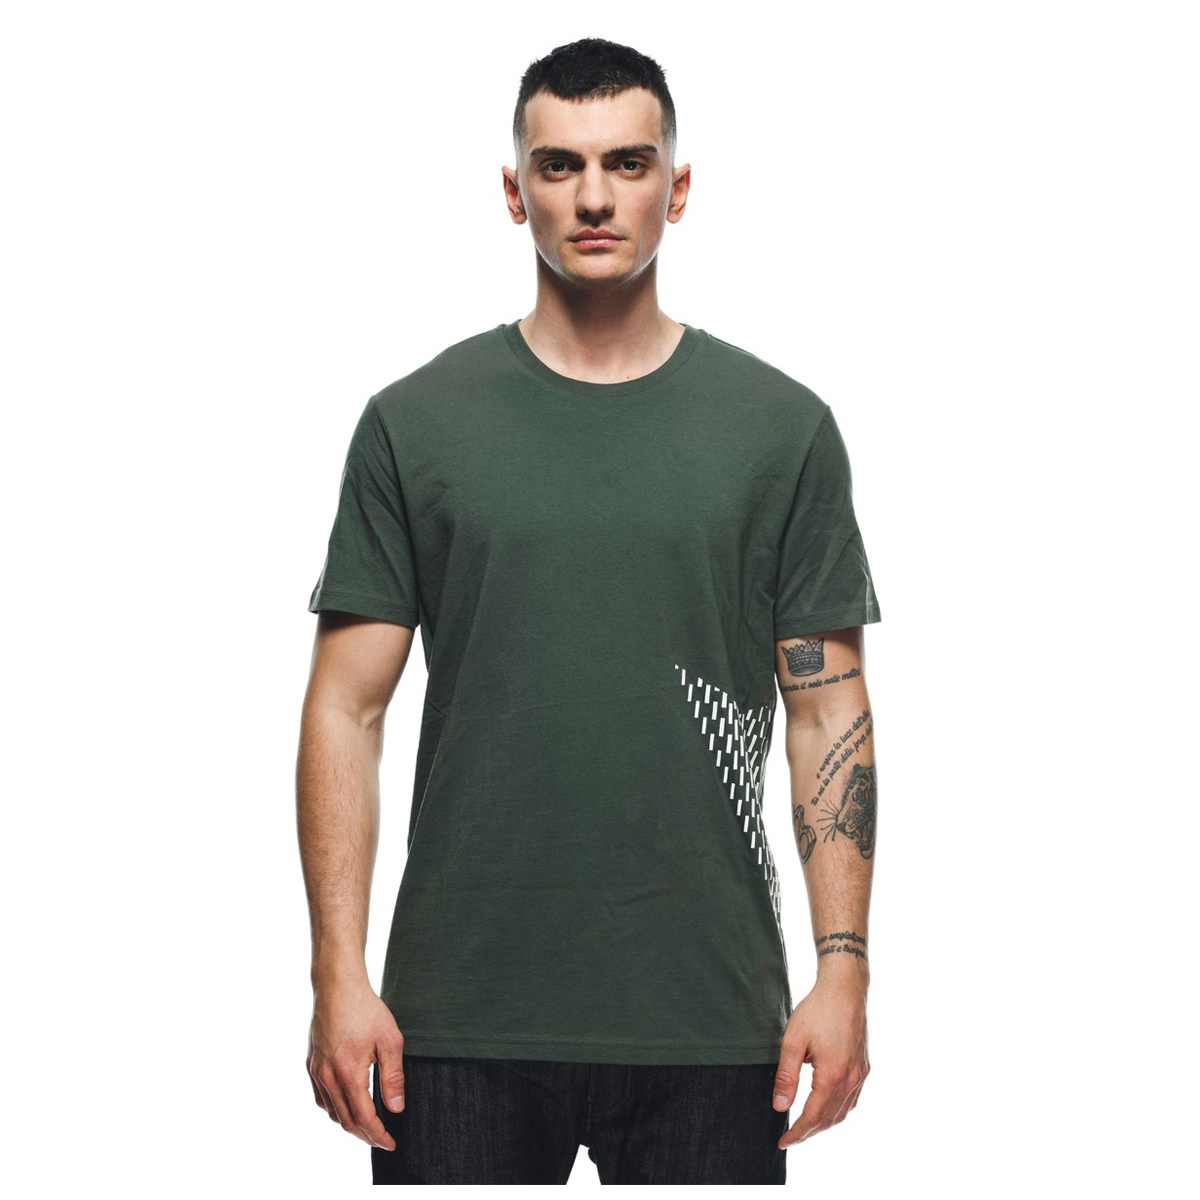 Dainese T-Shirt Big Logo, grün-weiß